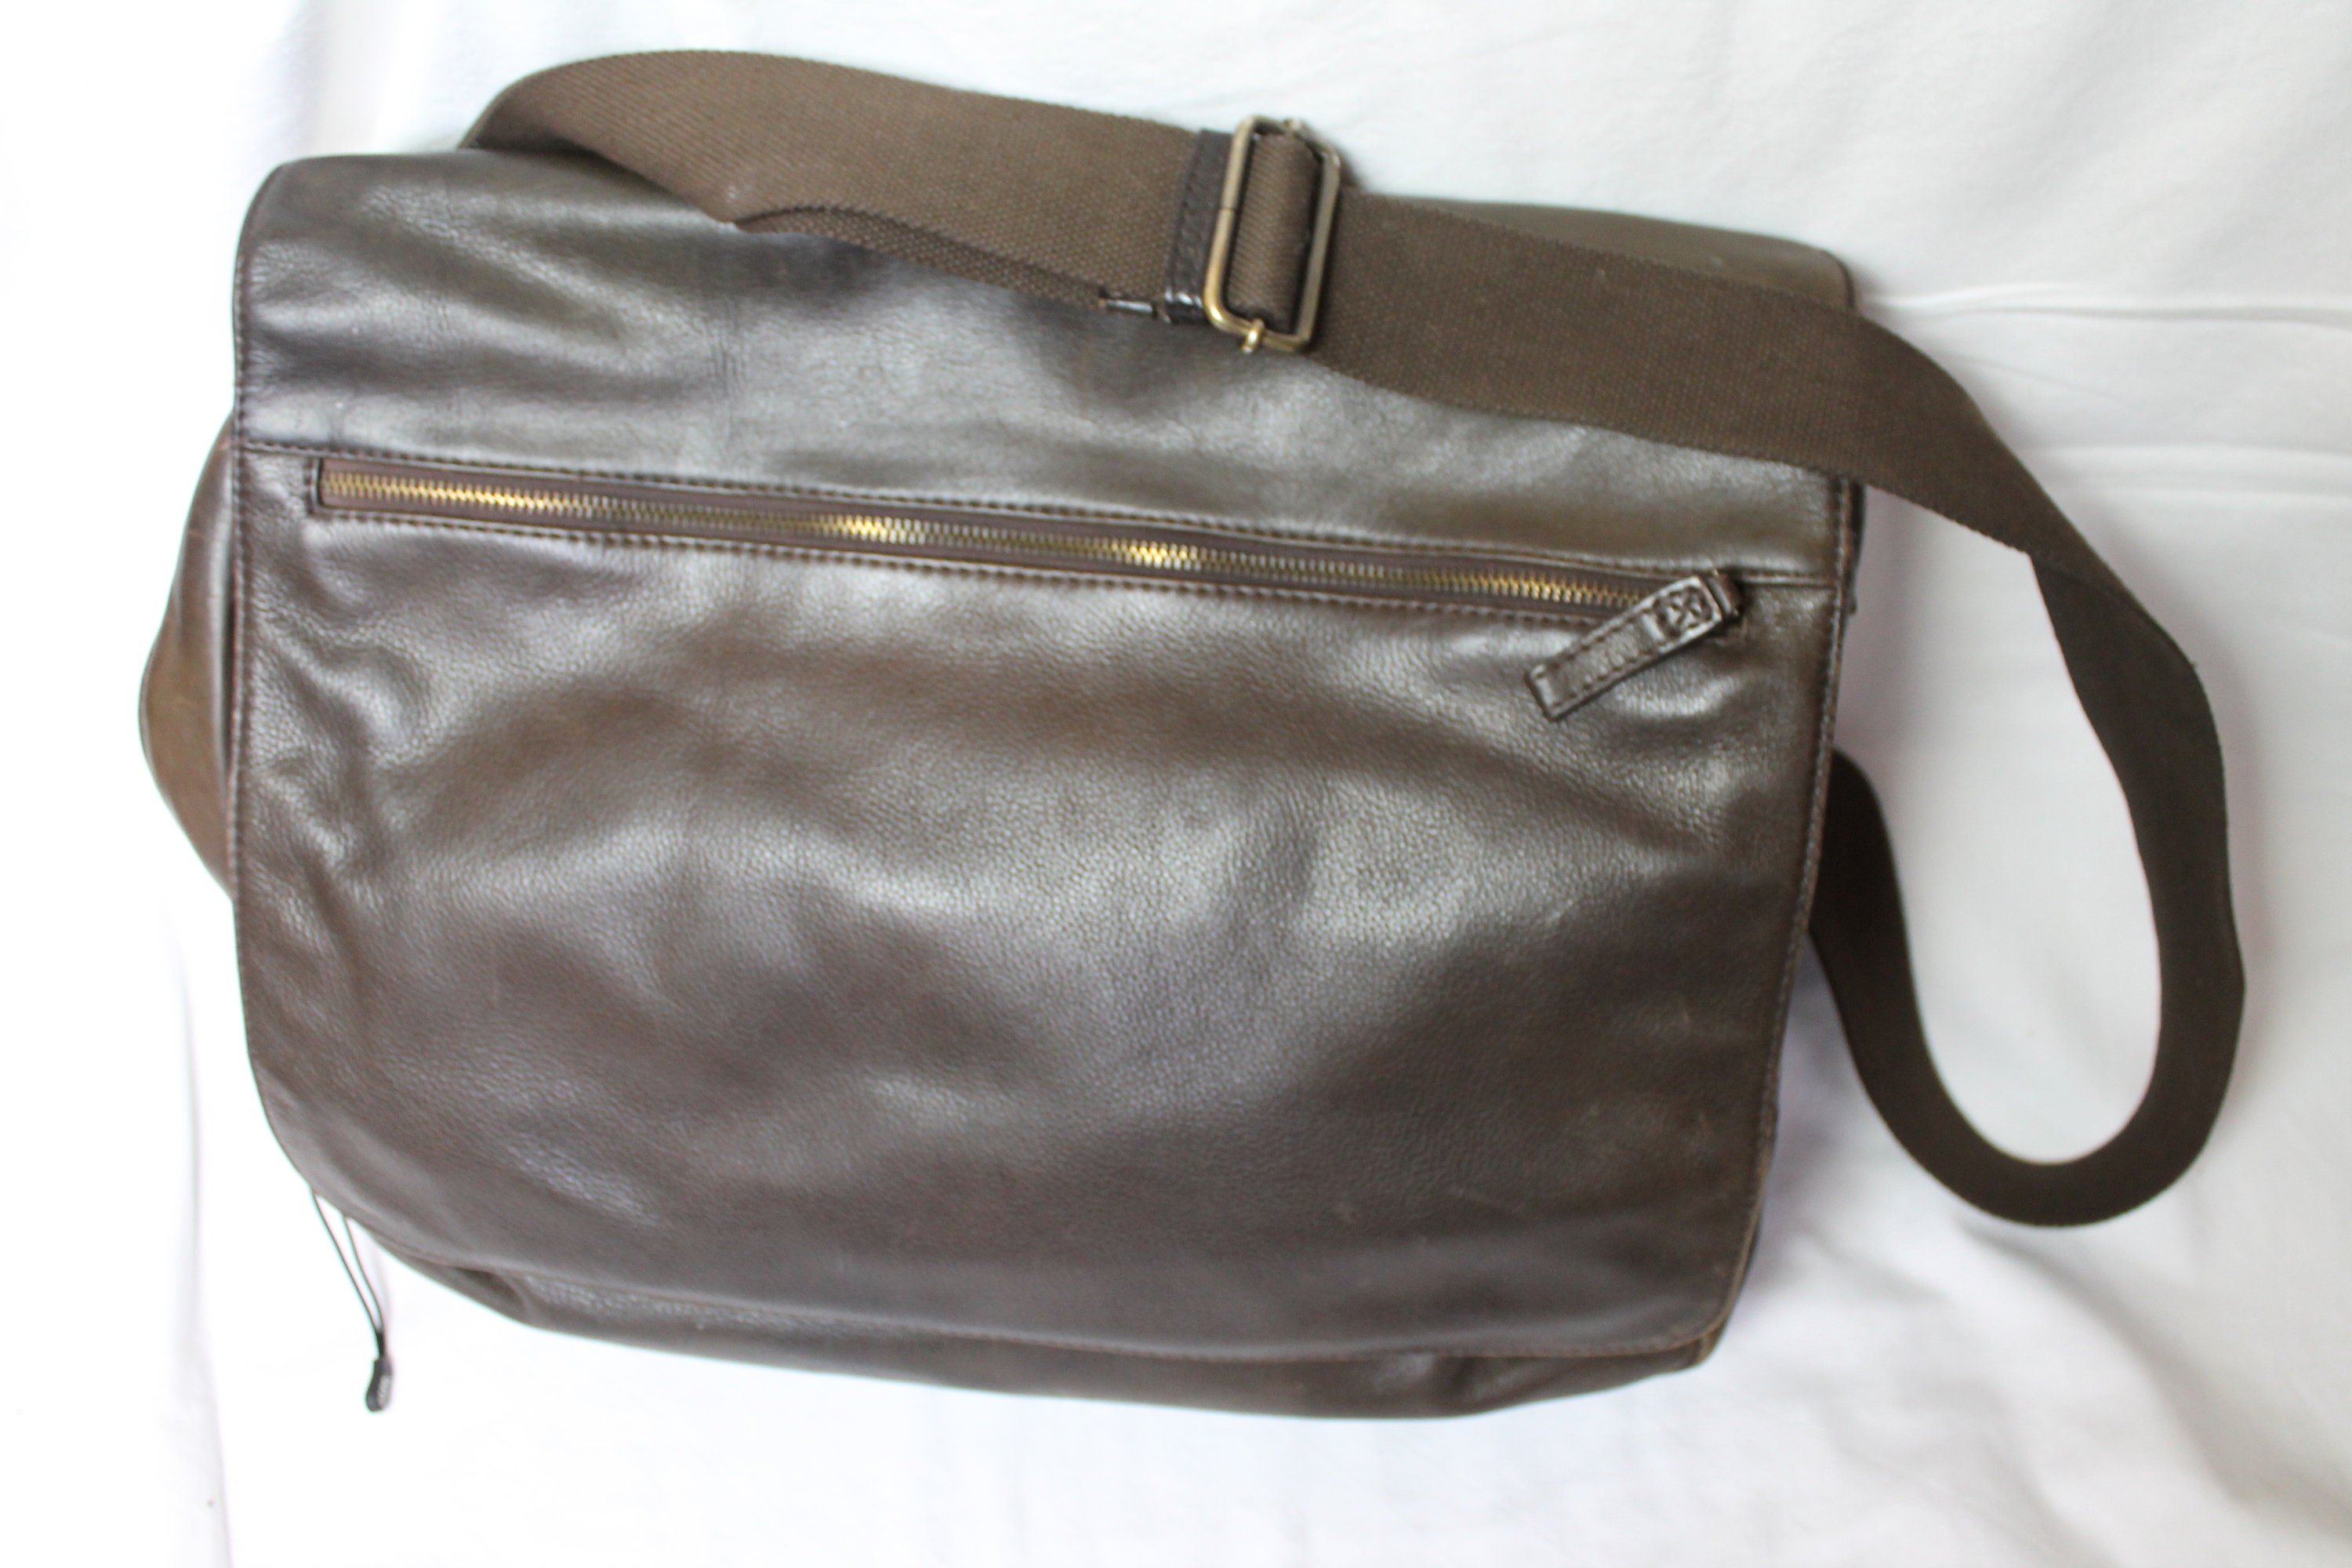 John Lewis Made in Italy Leather Messenger 2 Bag, Brown at John